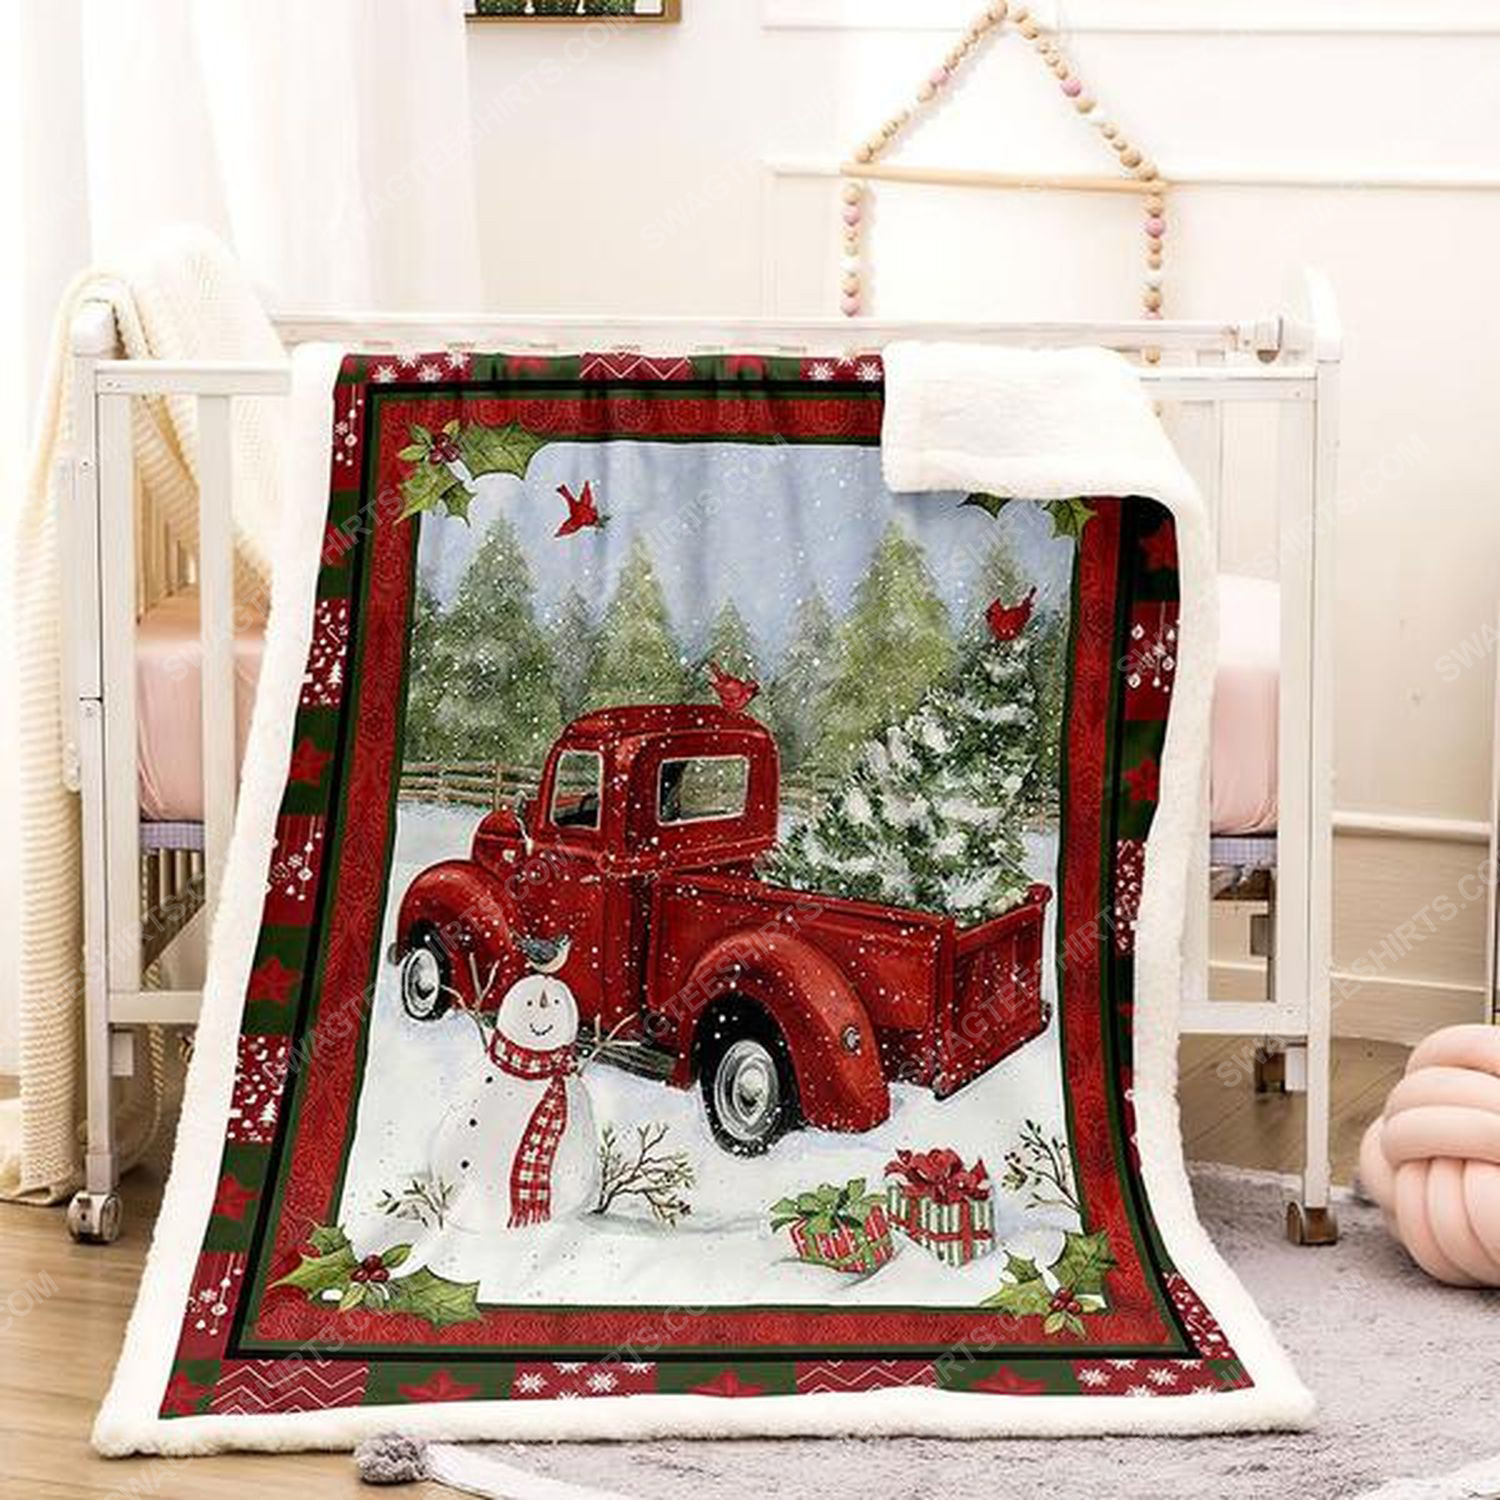 Vintage red truck christmas blanket 2 - Copy (2)